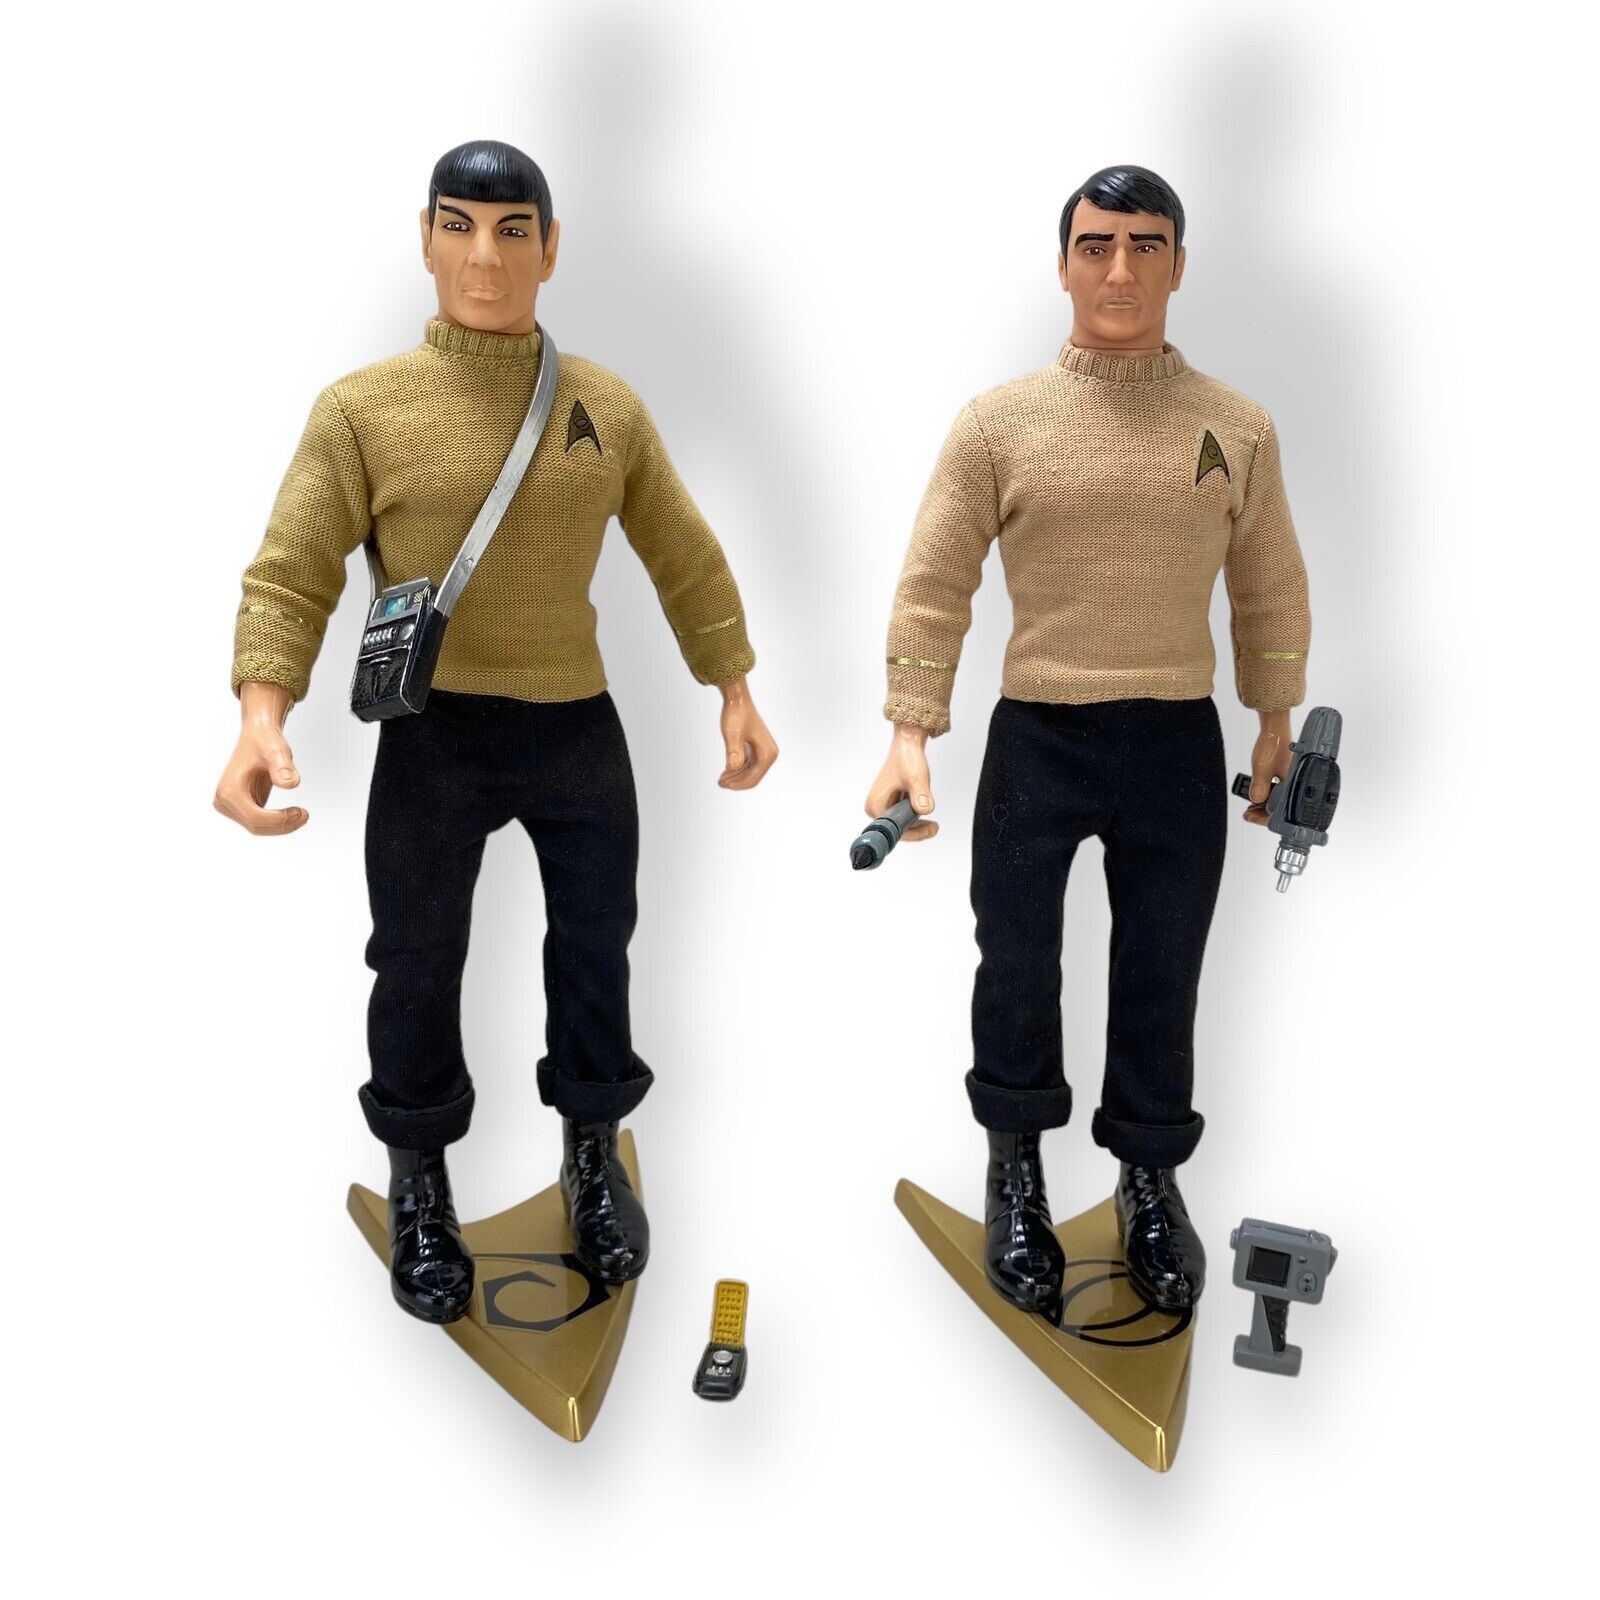 VTG 1994 Star Trek Mr. Spock And Mr. Scott - Scotty Action Figures Playmate Toys